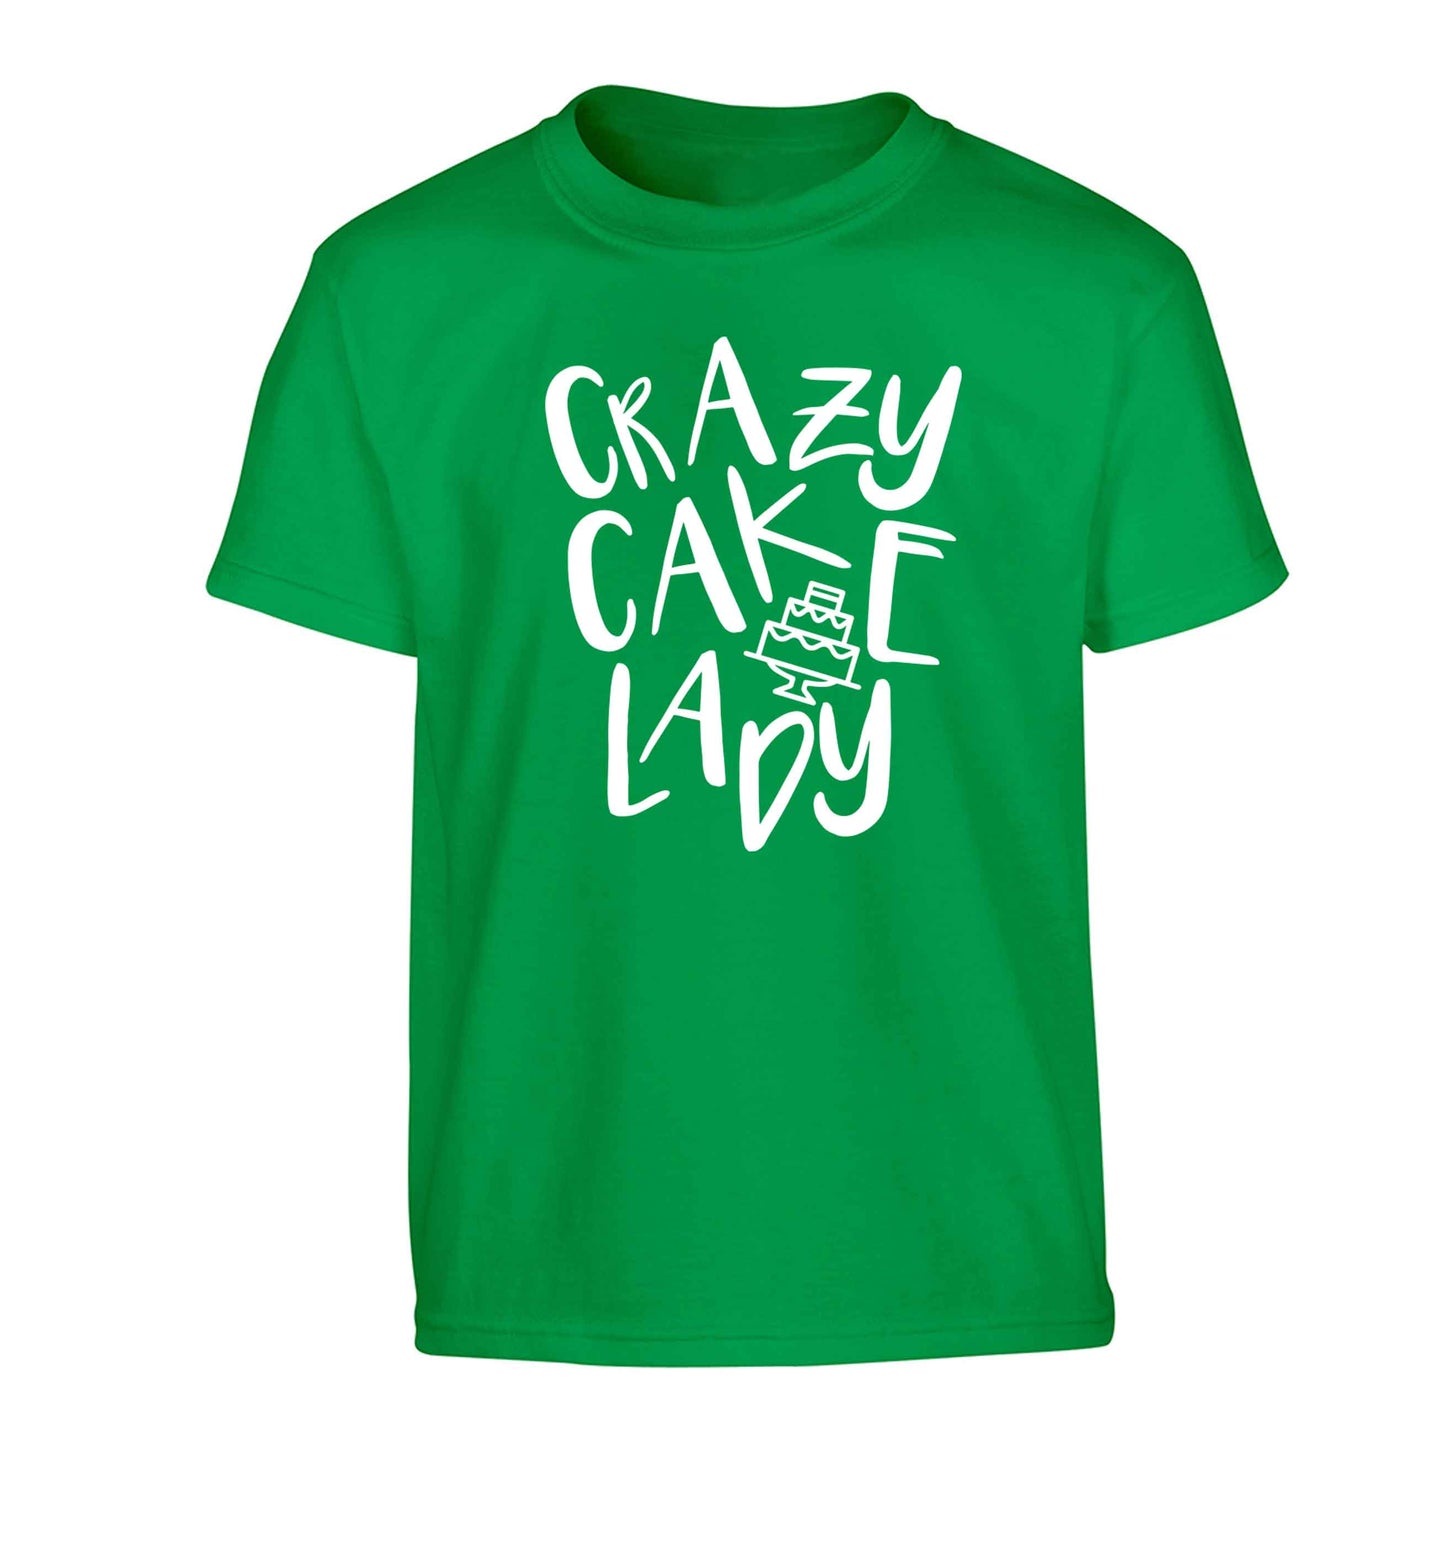 Crazy cake lady Children's green Tshirt 12-13 Years